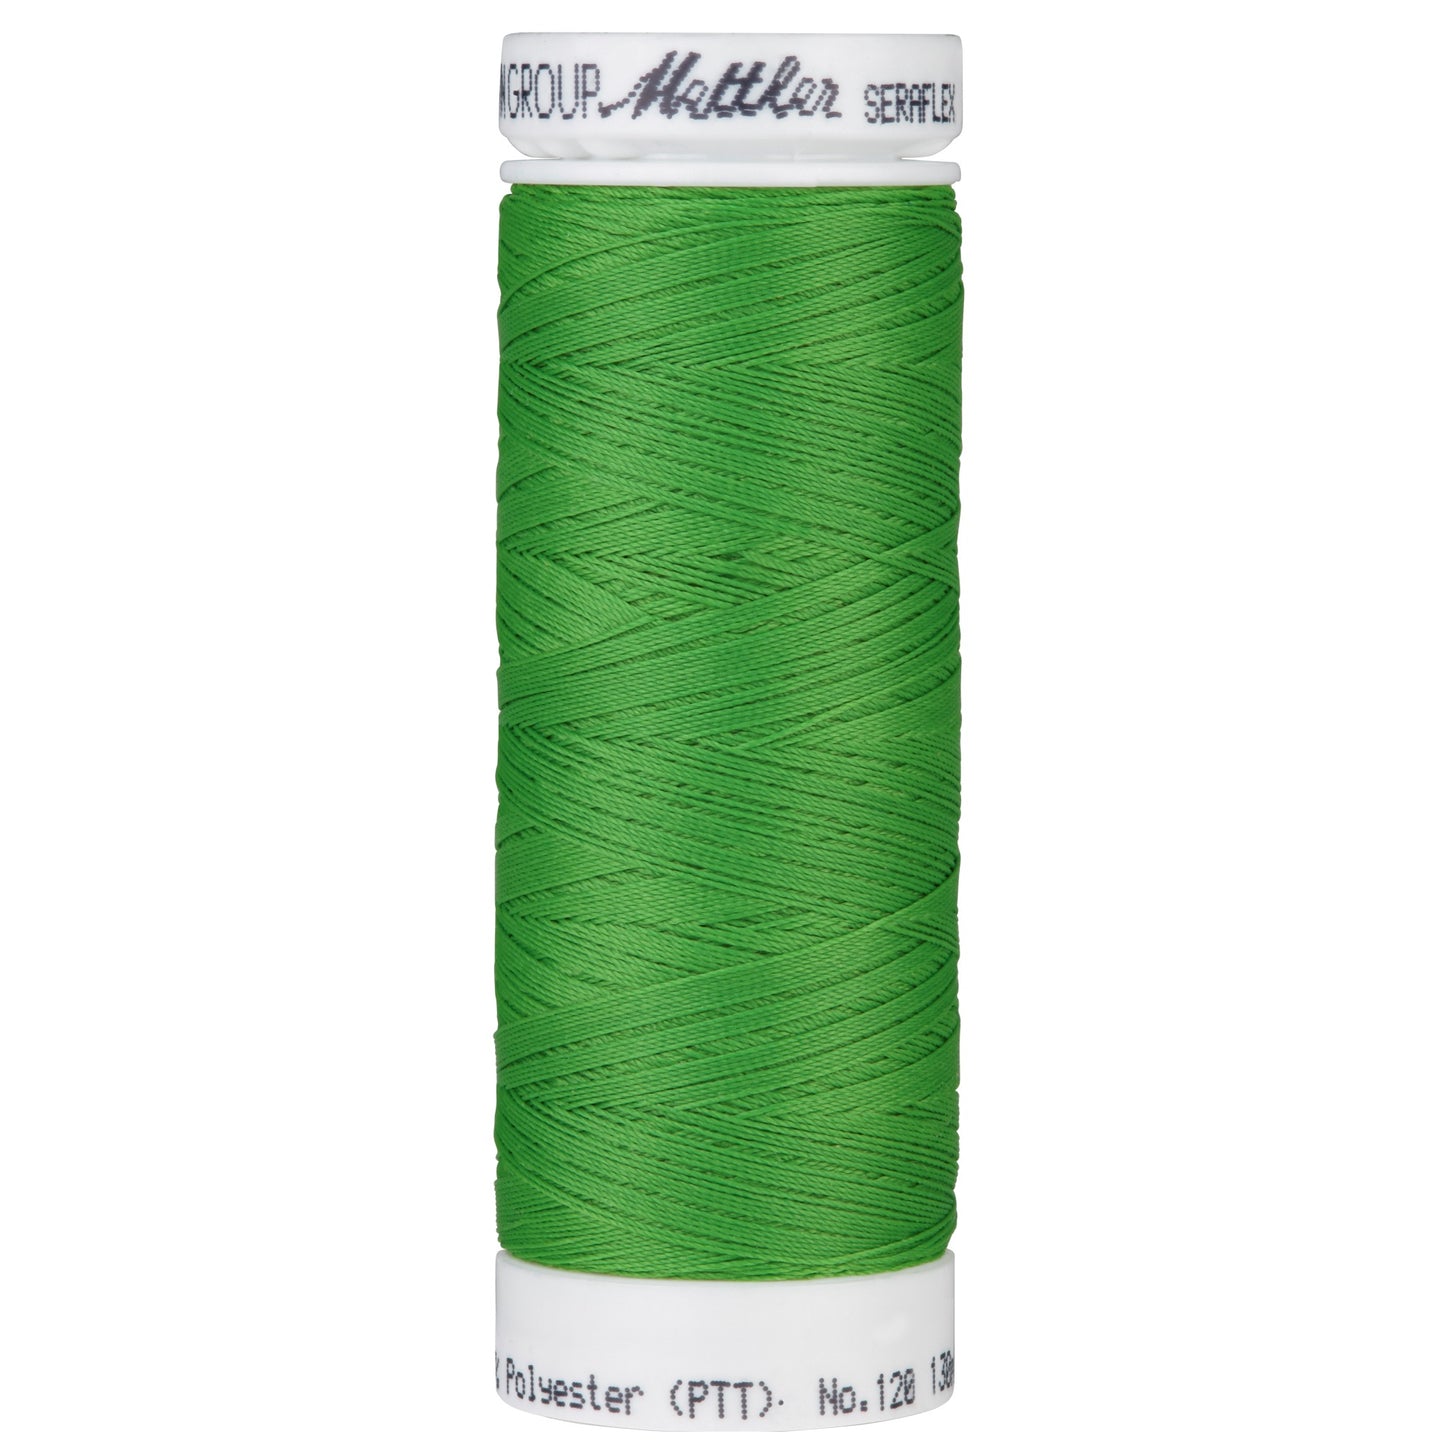 Seraflex - Mettler - Stretch Thread - For Stretchy Seams - 130 Meters - Light Kelly